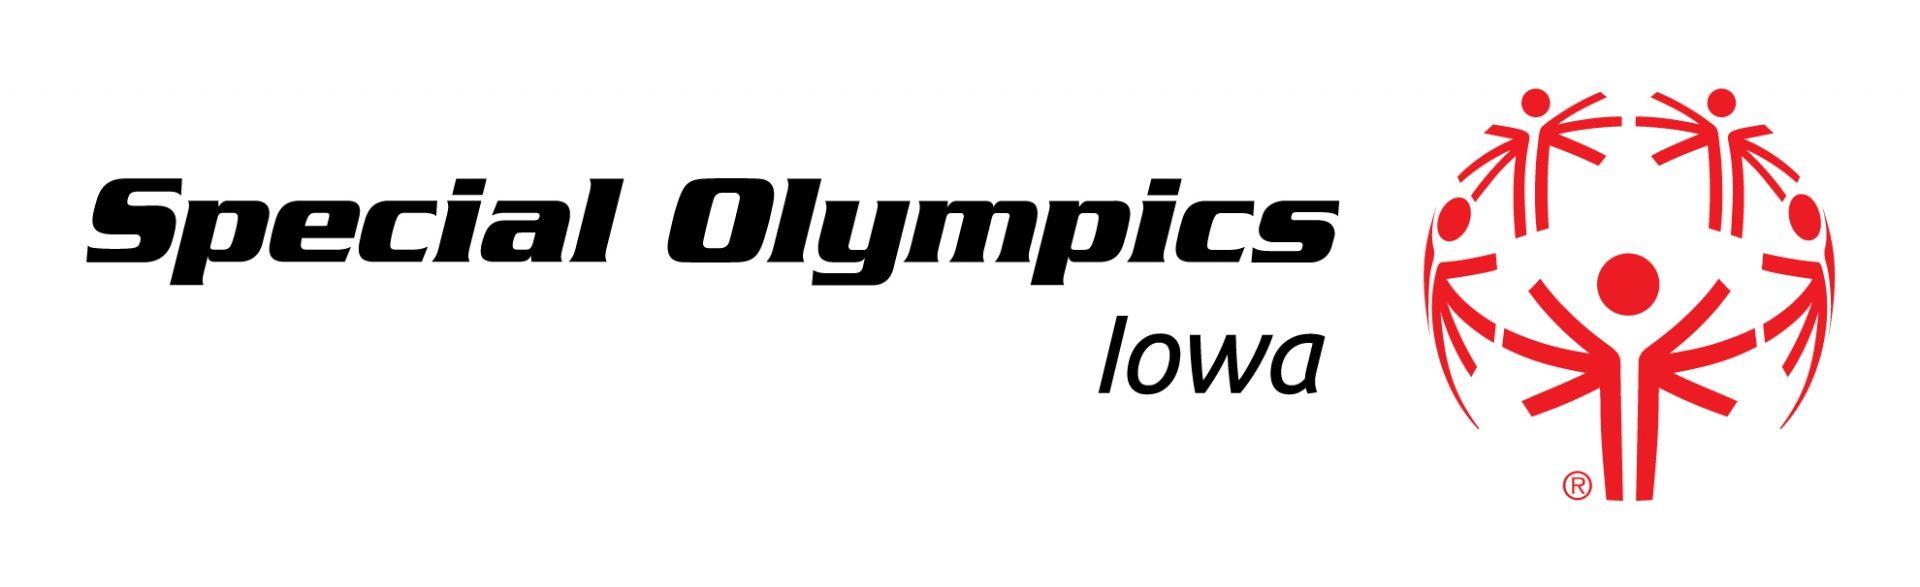 Google Special Logo - Logos - Special Olympics Iowa